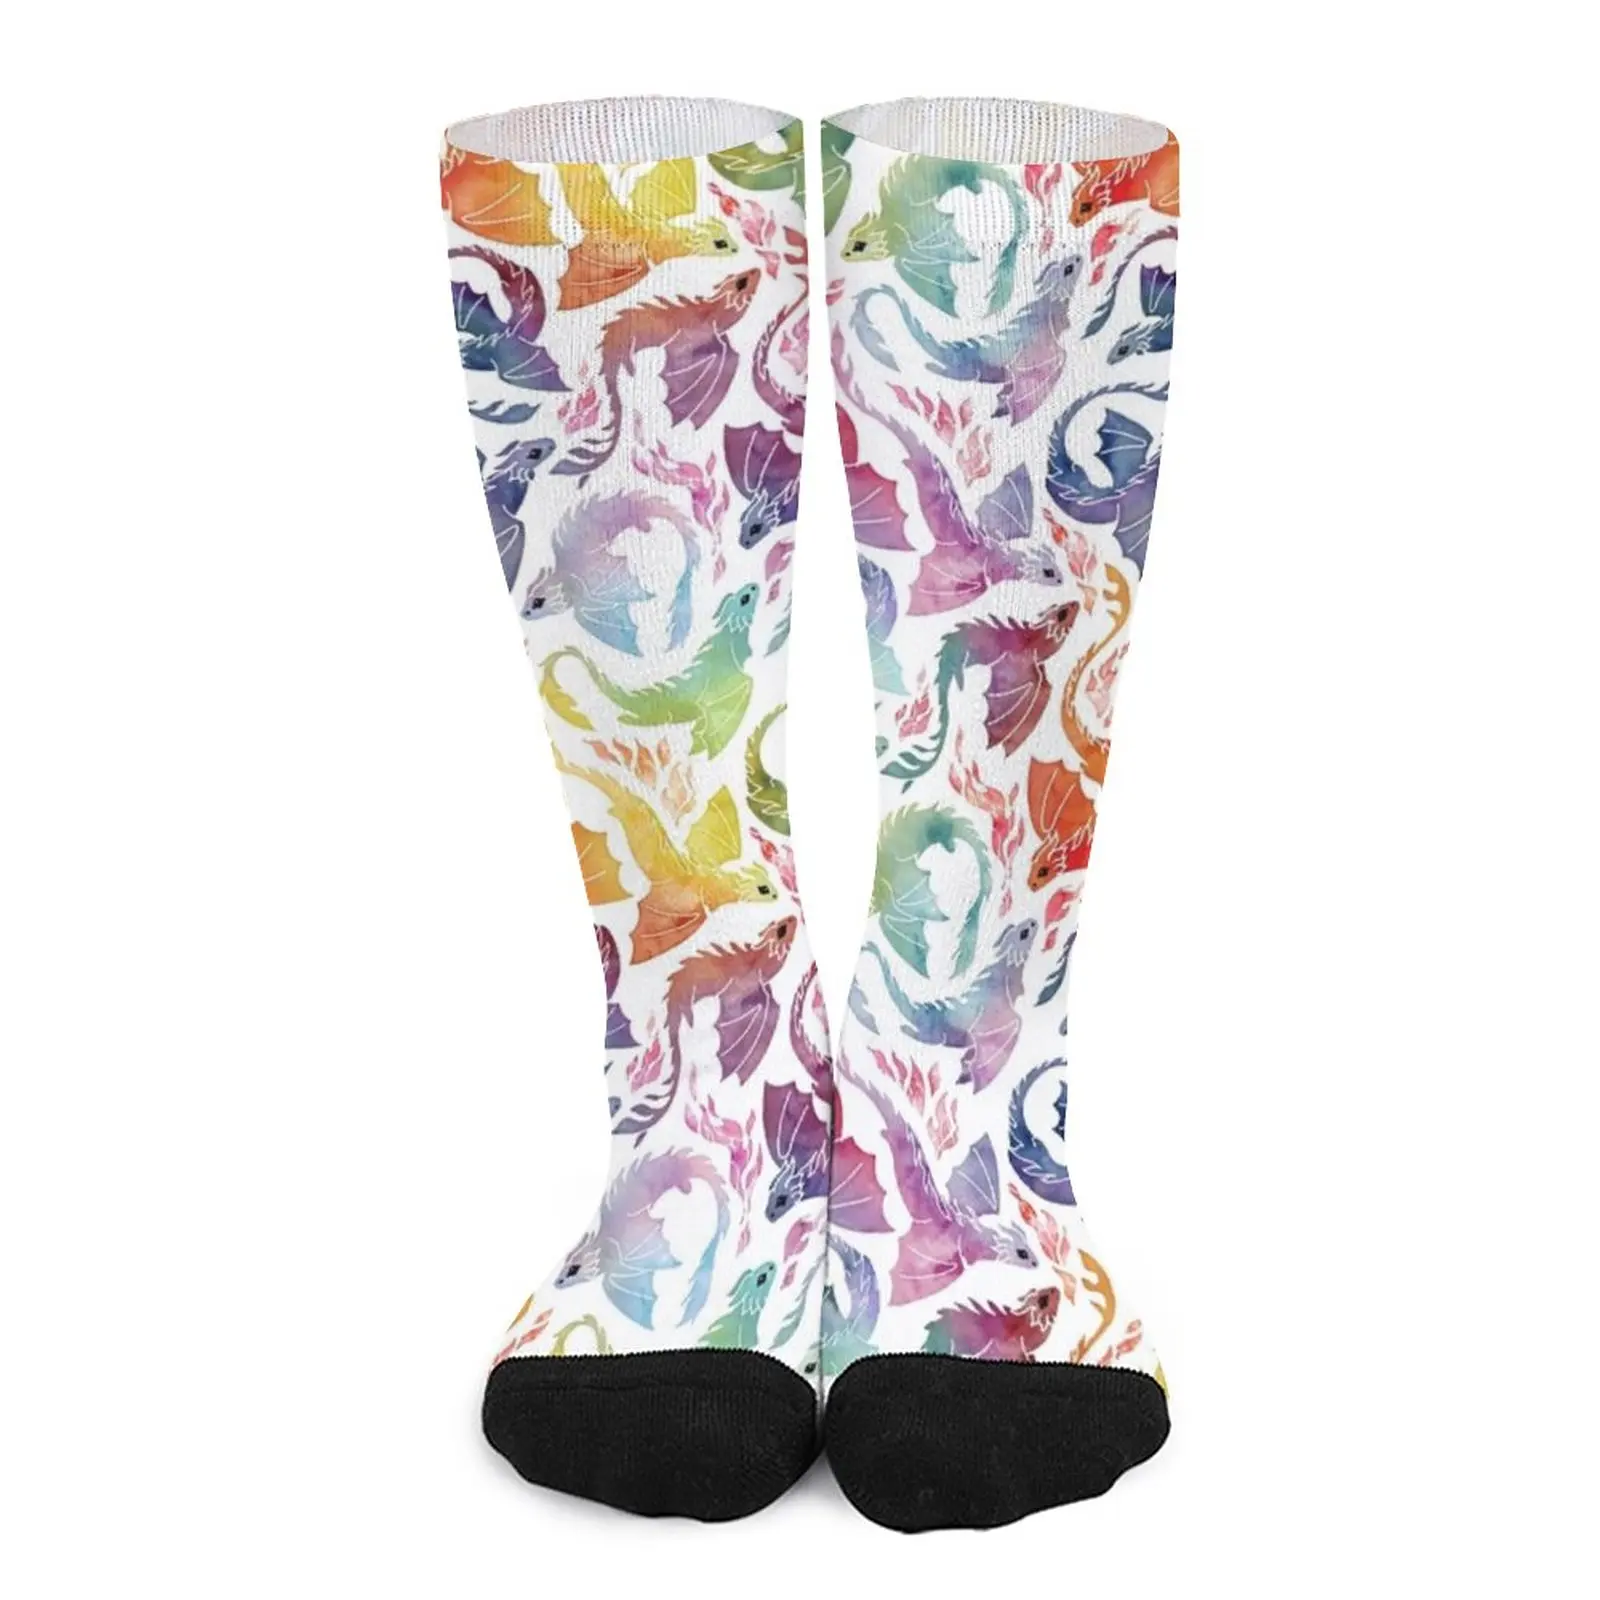 Dragon fire rainbow Socks custom socks funny socks for Women valentines day gift for boyfriend shoes rainbow